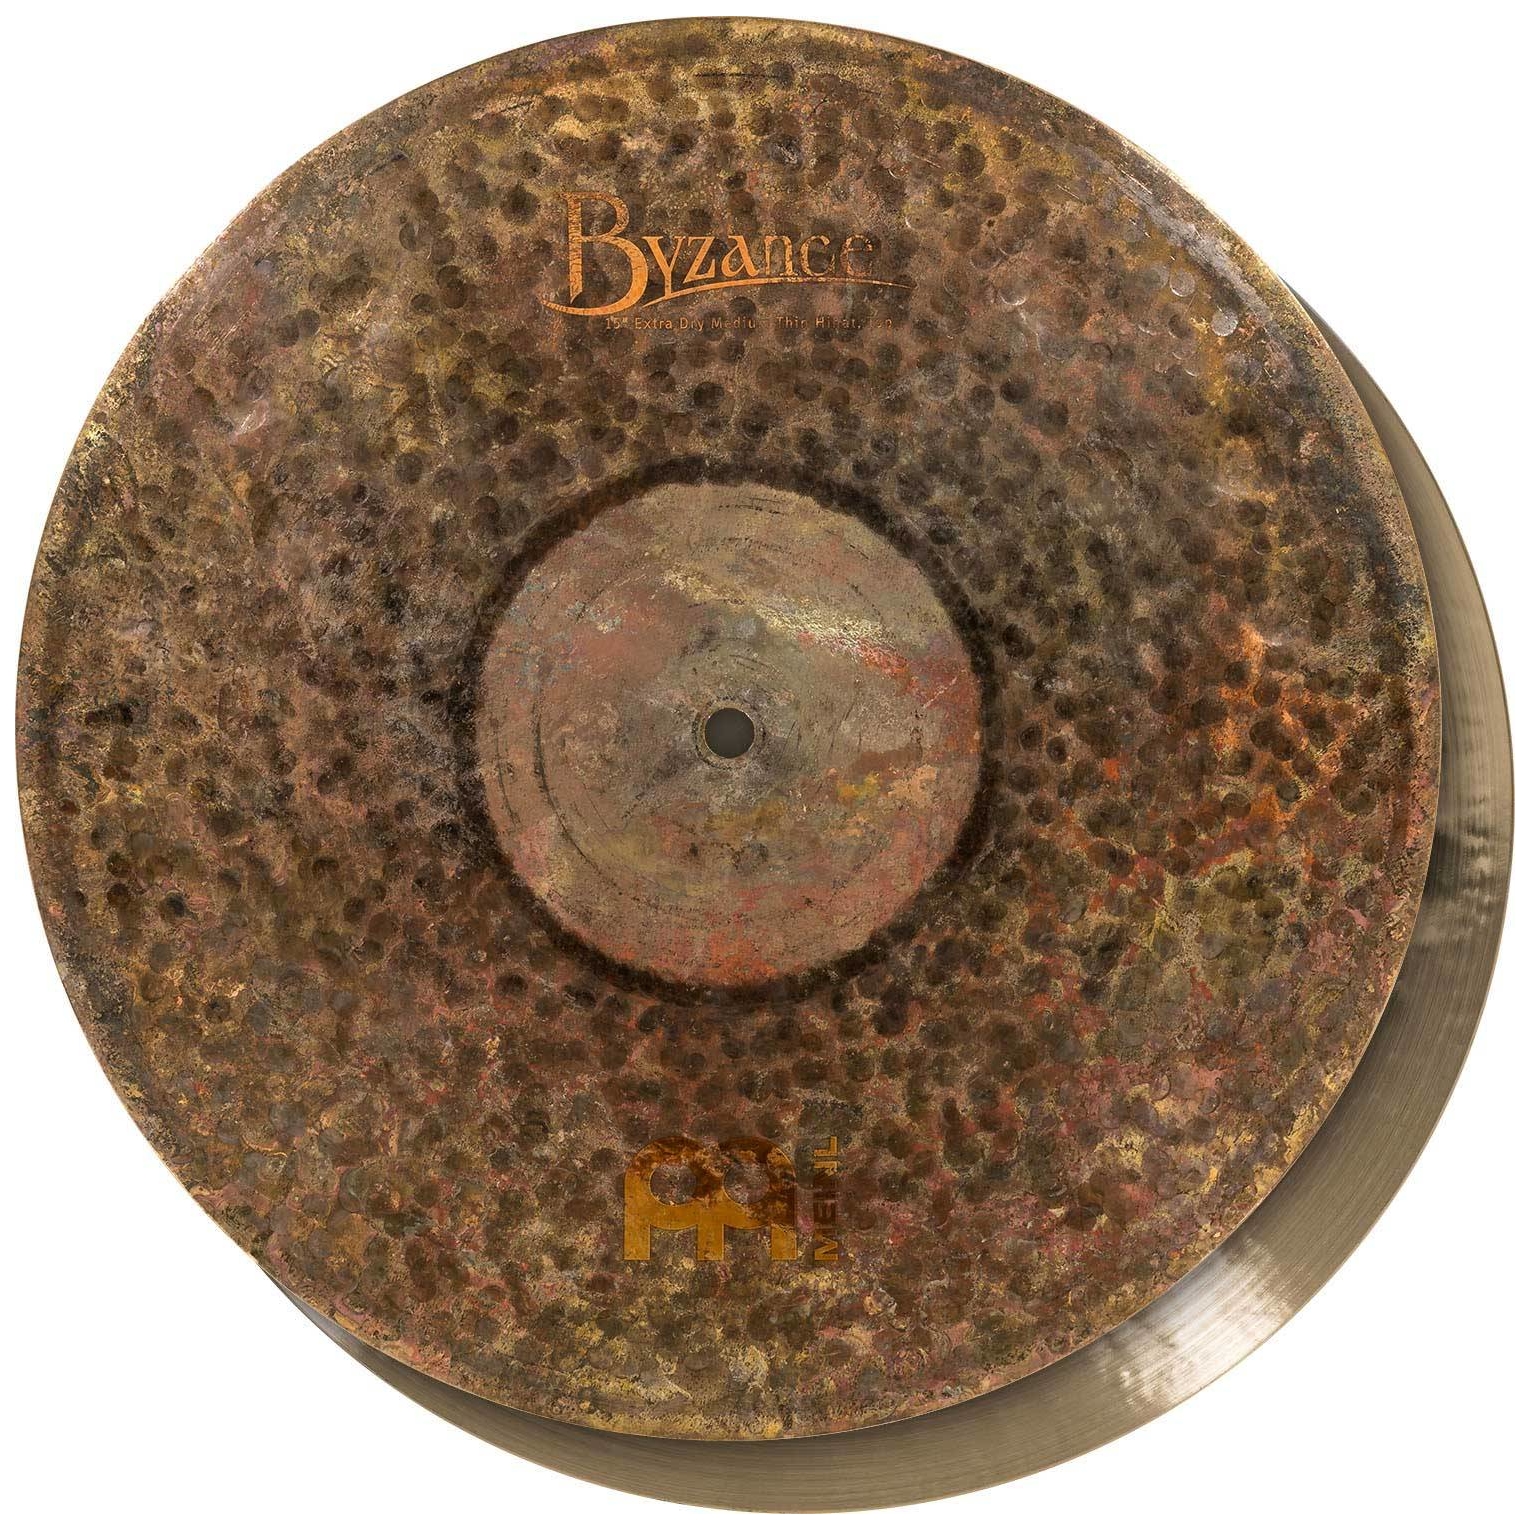 Meinl Cymbals B15EDMTH - 15" Byzance Extra Dry Medium Thin Hihat